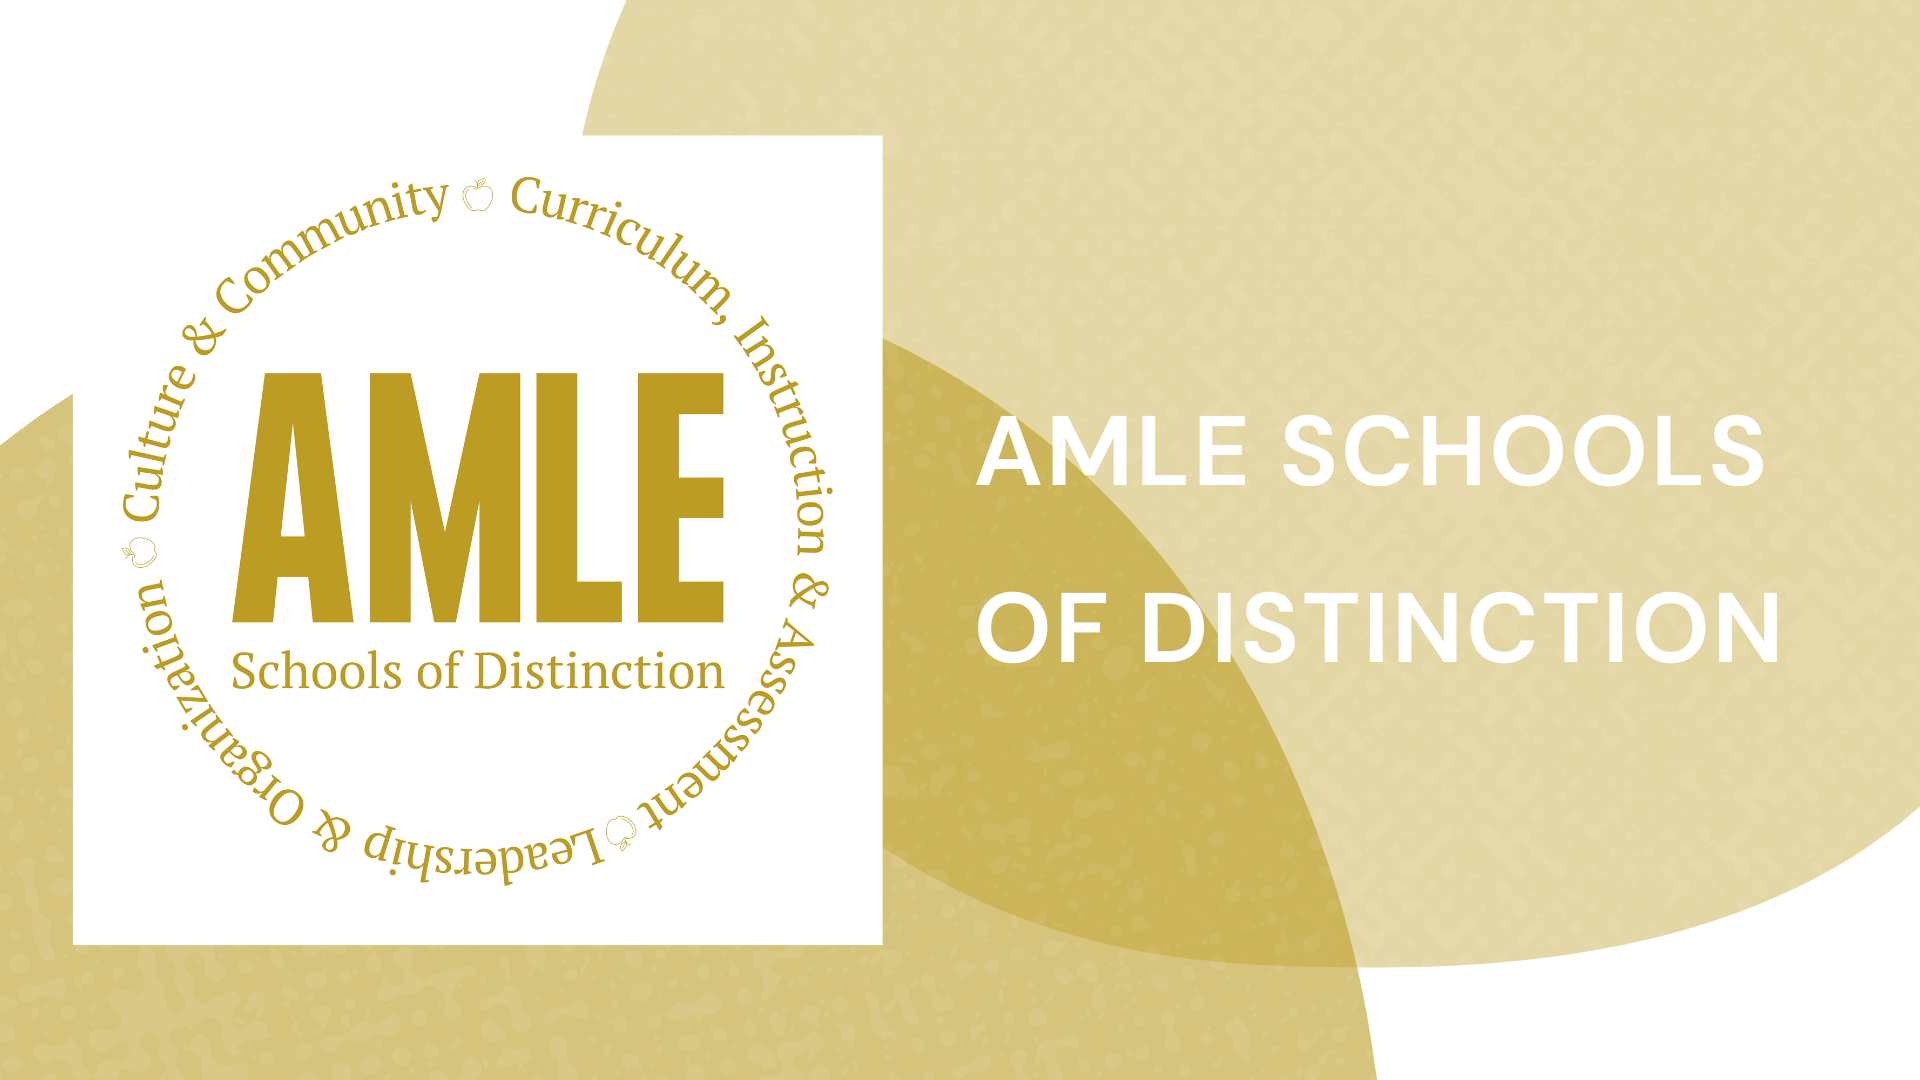 AMLE Schools of Distinction